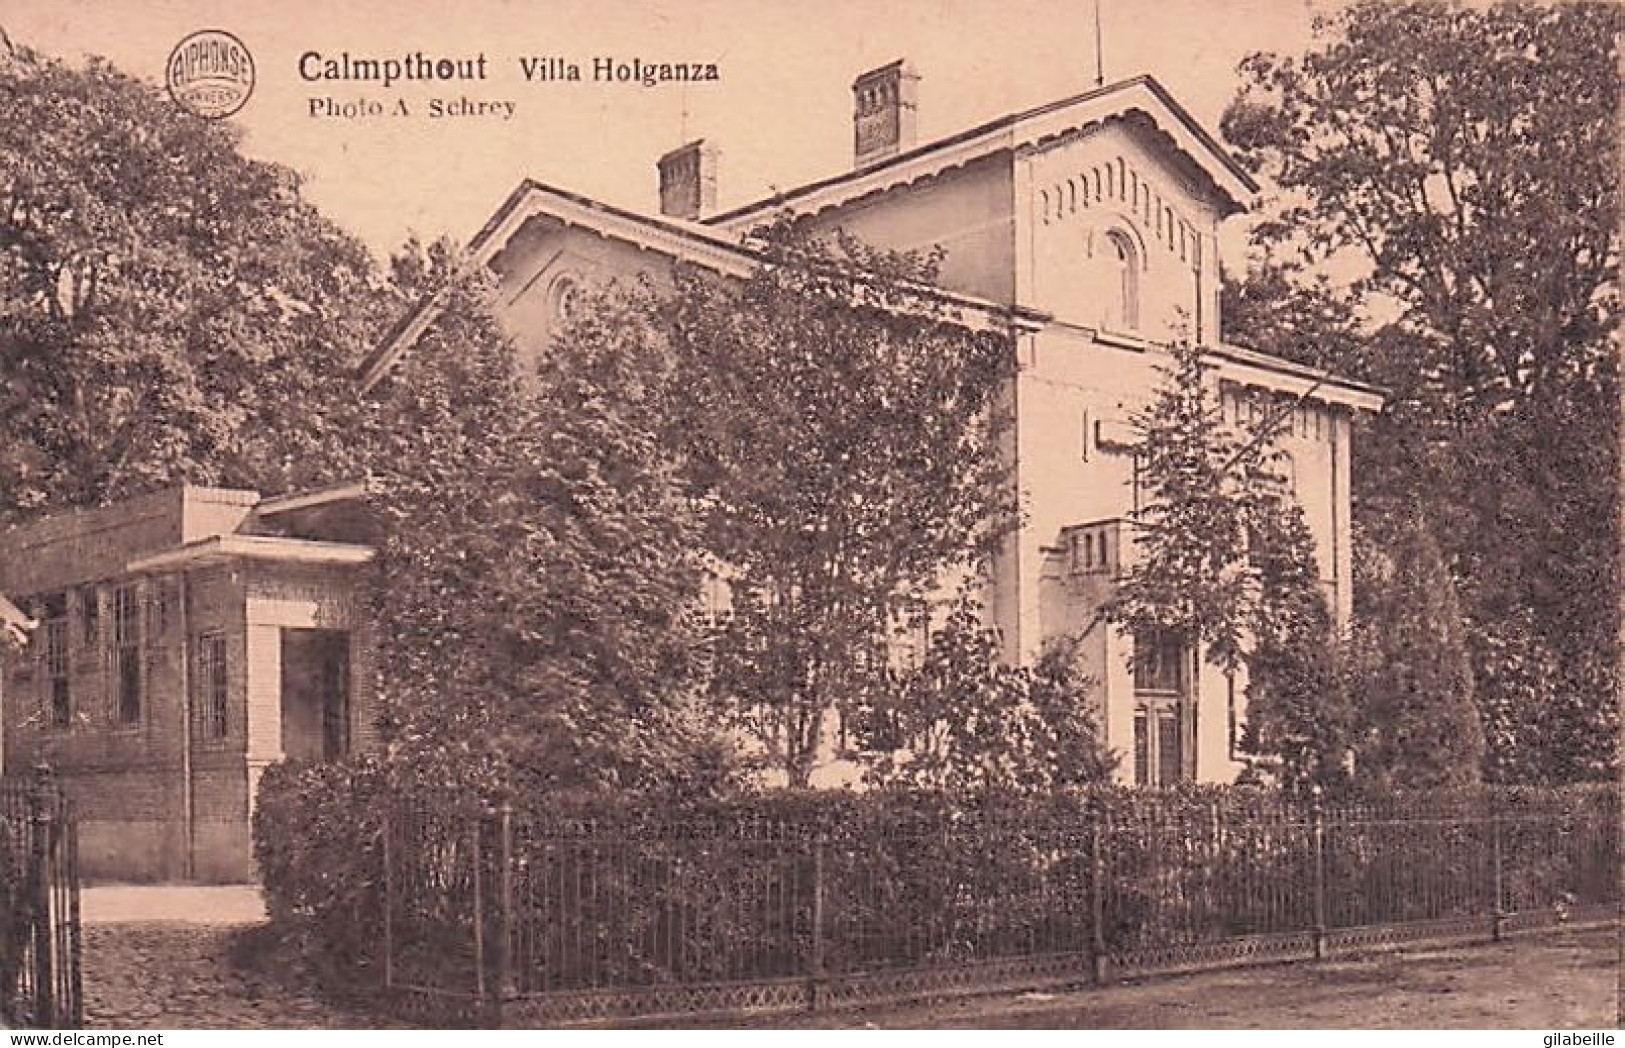 Kalmthout - Calmpthout - Villa Holganza - Kalmthout